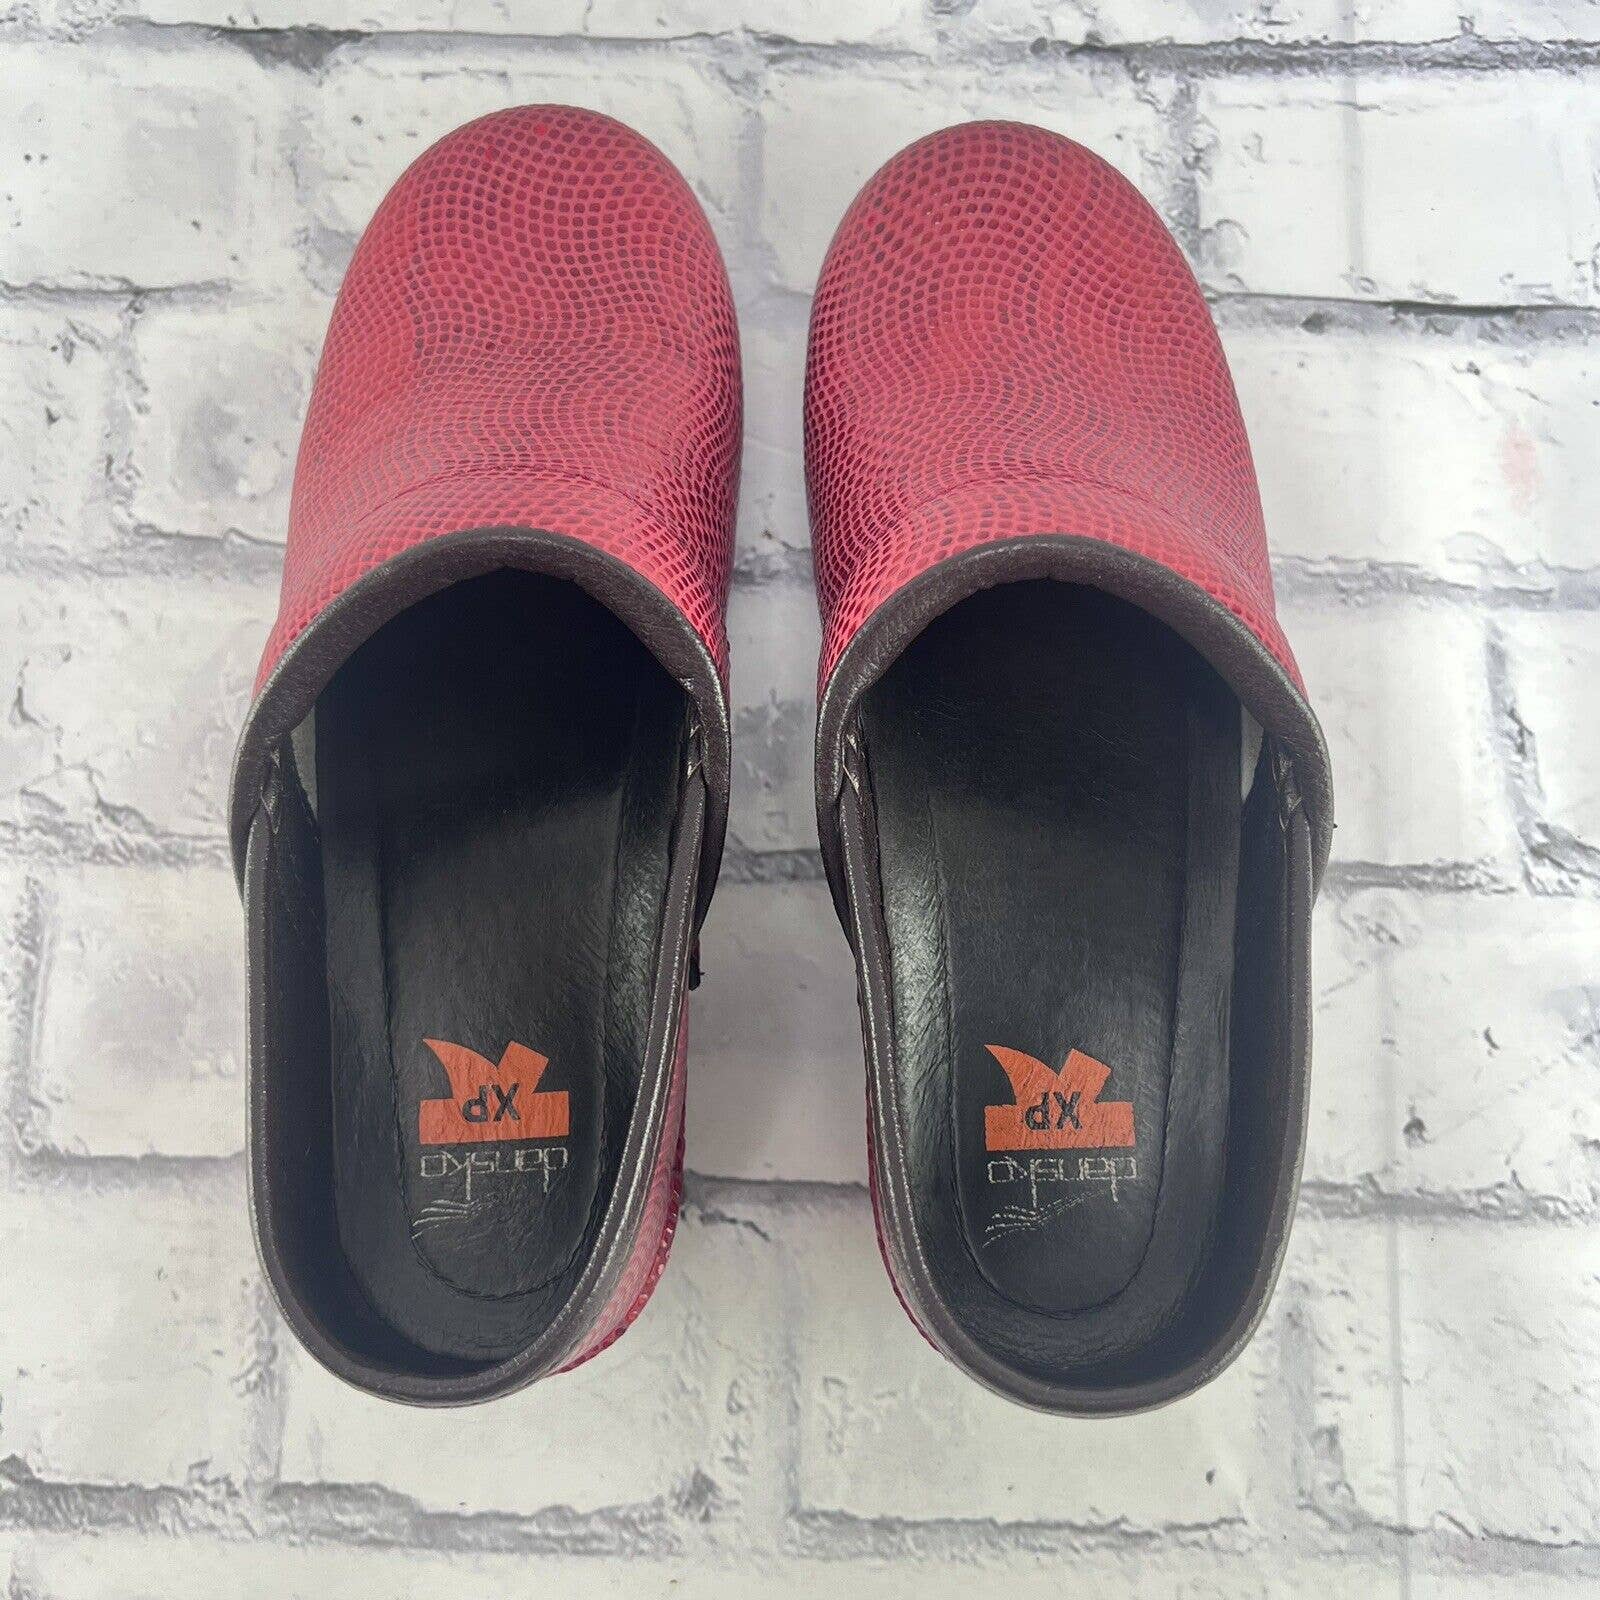 Dansko XP Red Moray Clogs Women’s 37 (US 6.5 - 7) Snakeskin Leather Shoes